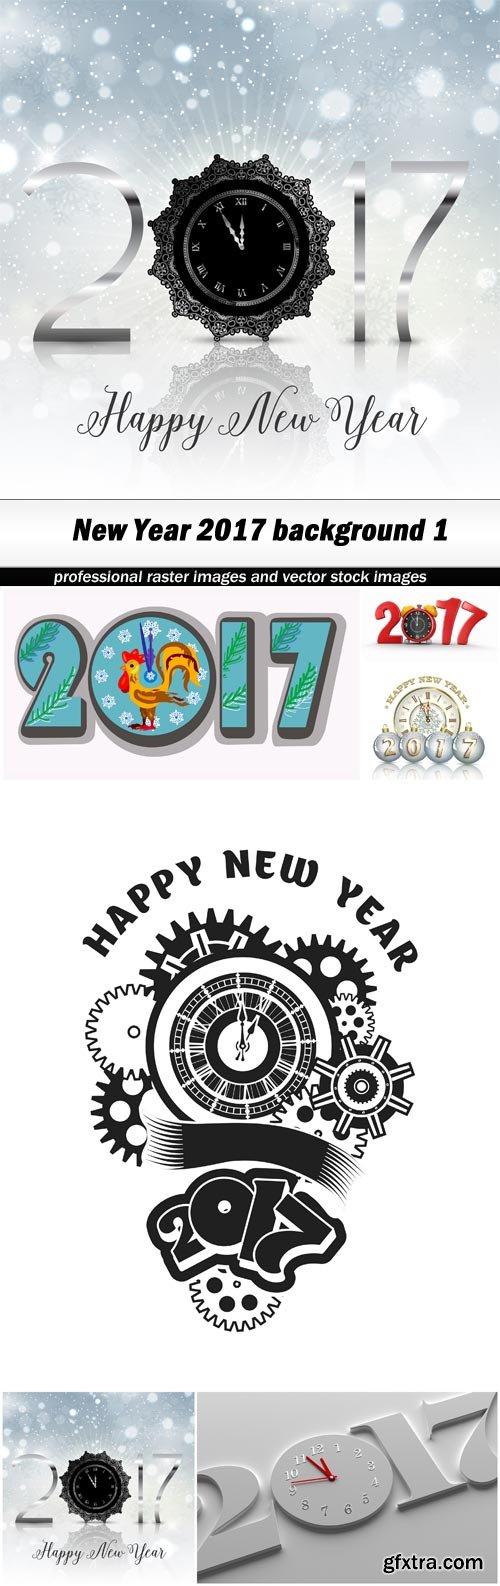 New Year 2017 background 1 - 6 UHQ JPEG